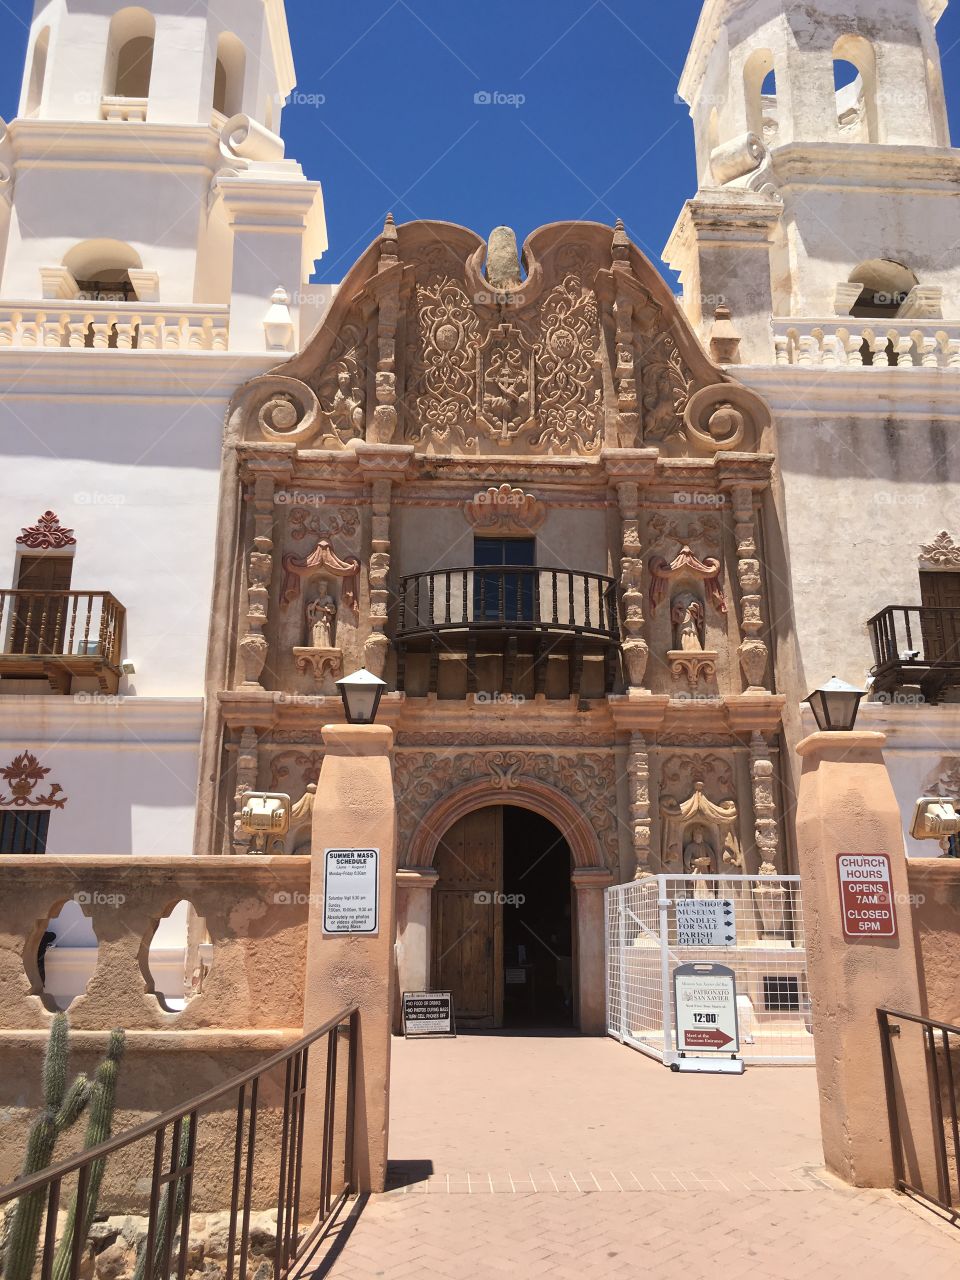 Beautiful Mission San Xavier de Blac in Tucson Arizona. Amazing architecture and Mesmerizing colors.